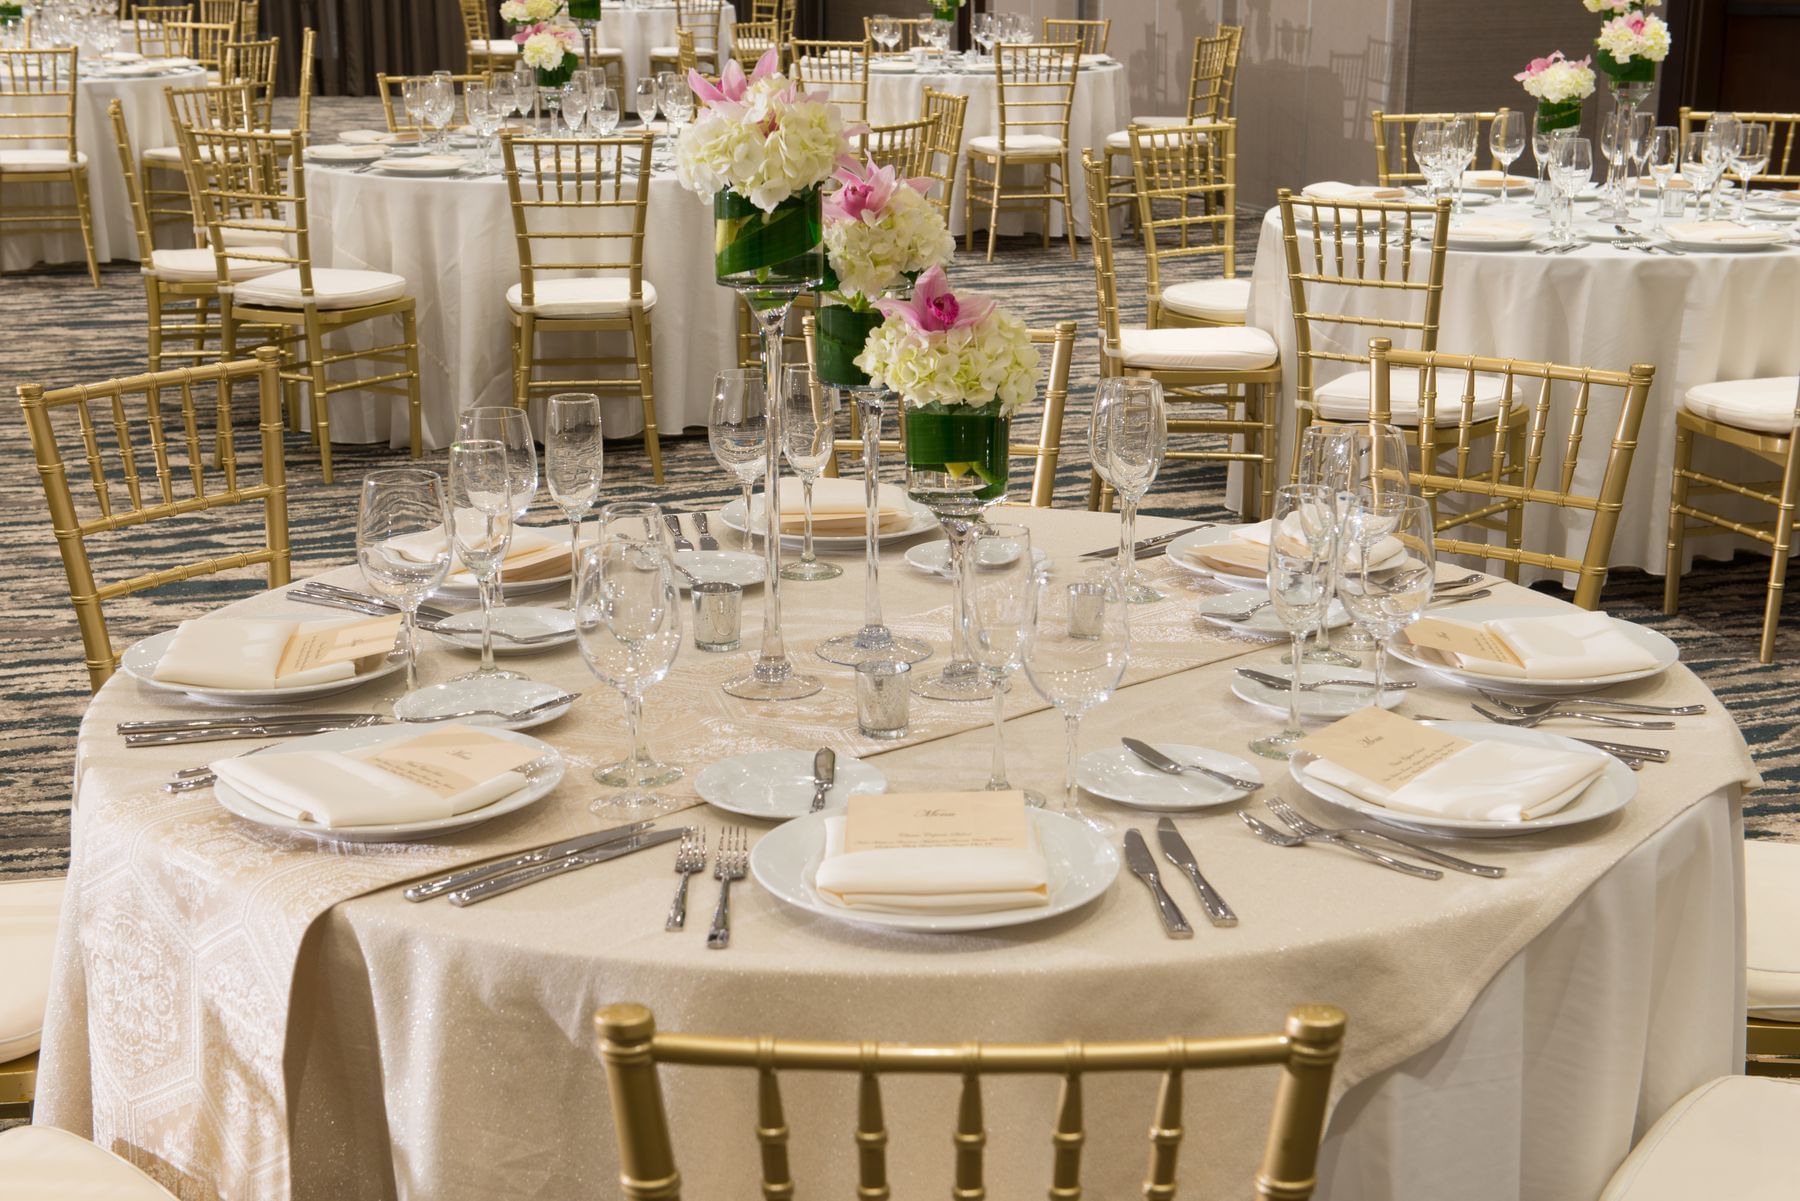 Banquet rounds set with floral centerpieces 